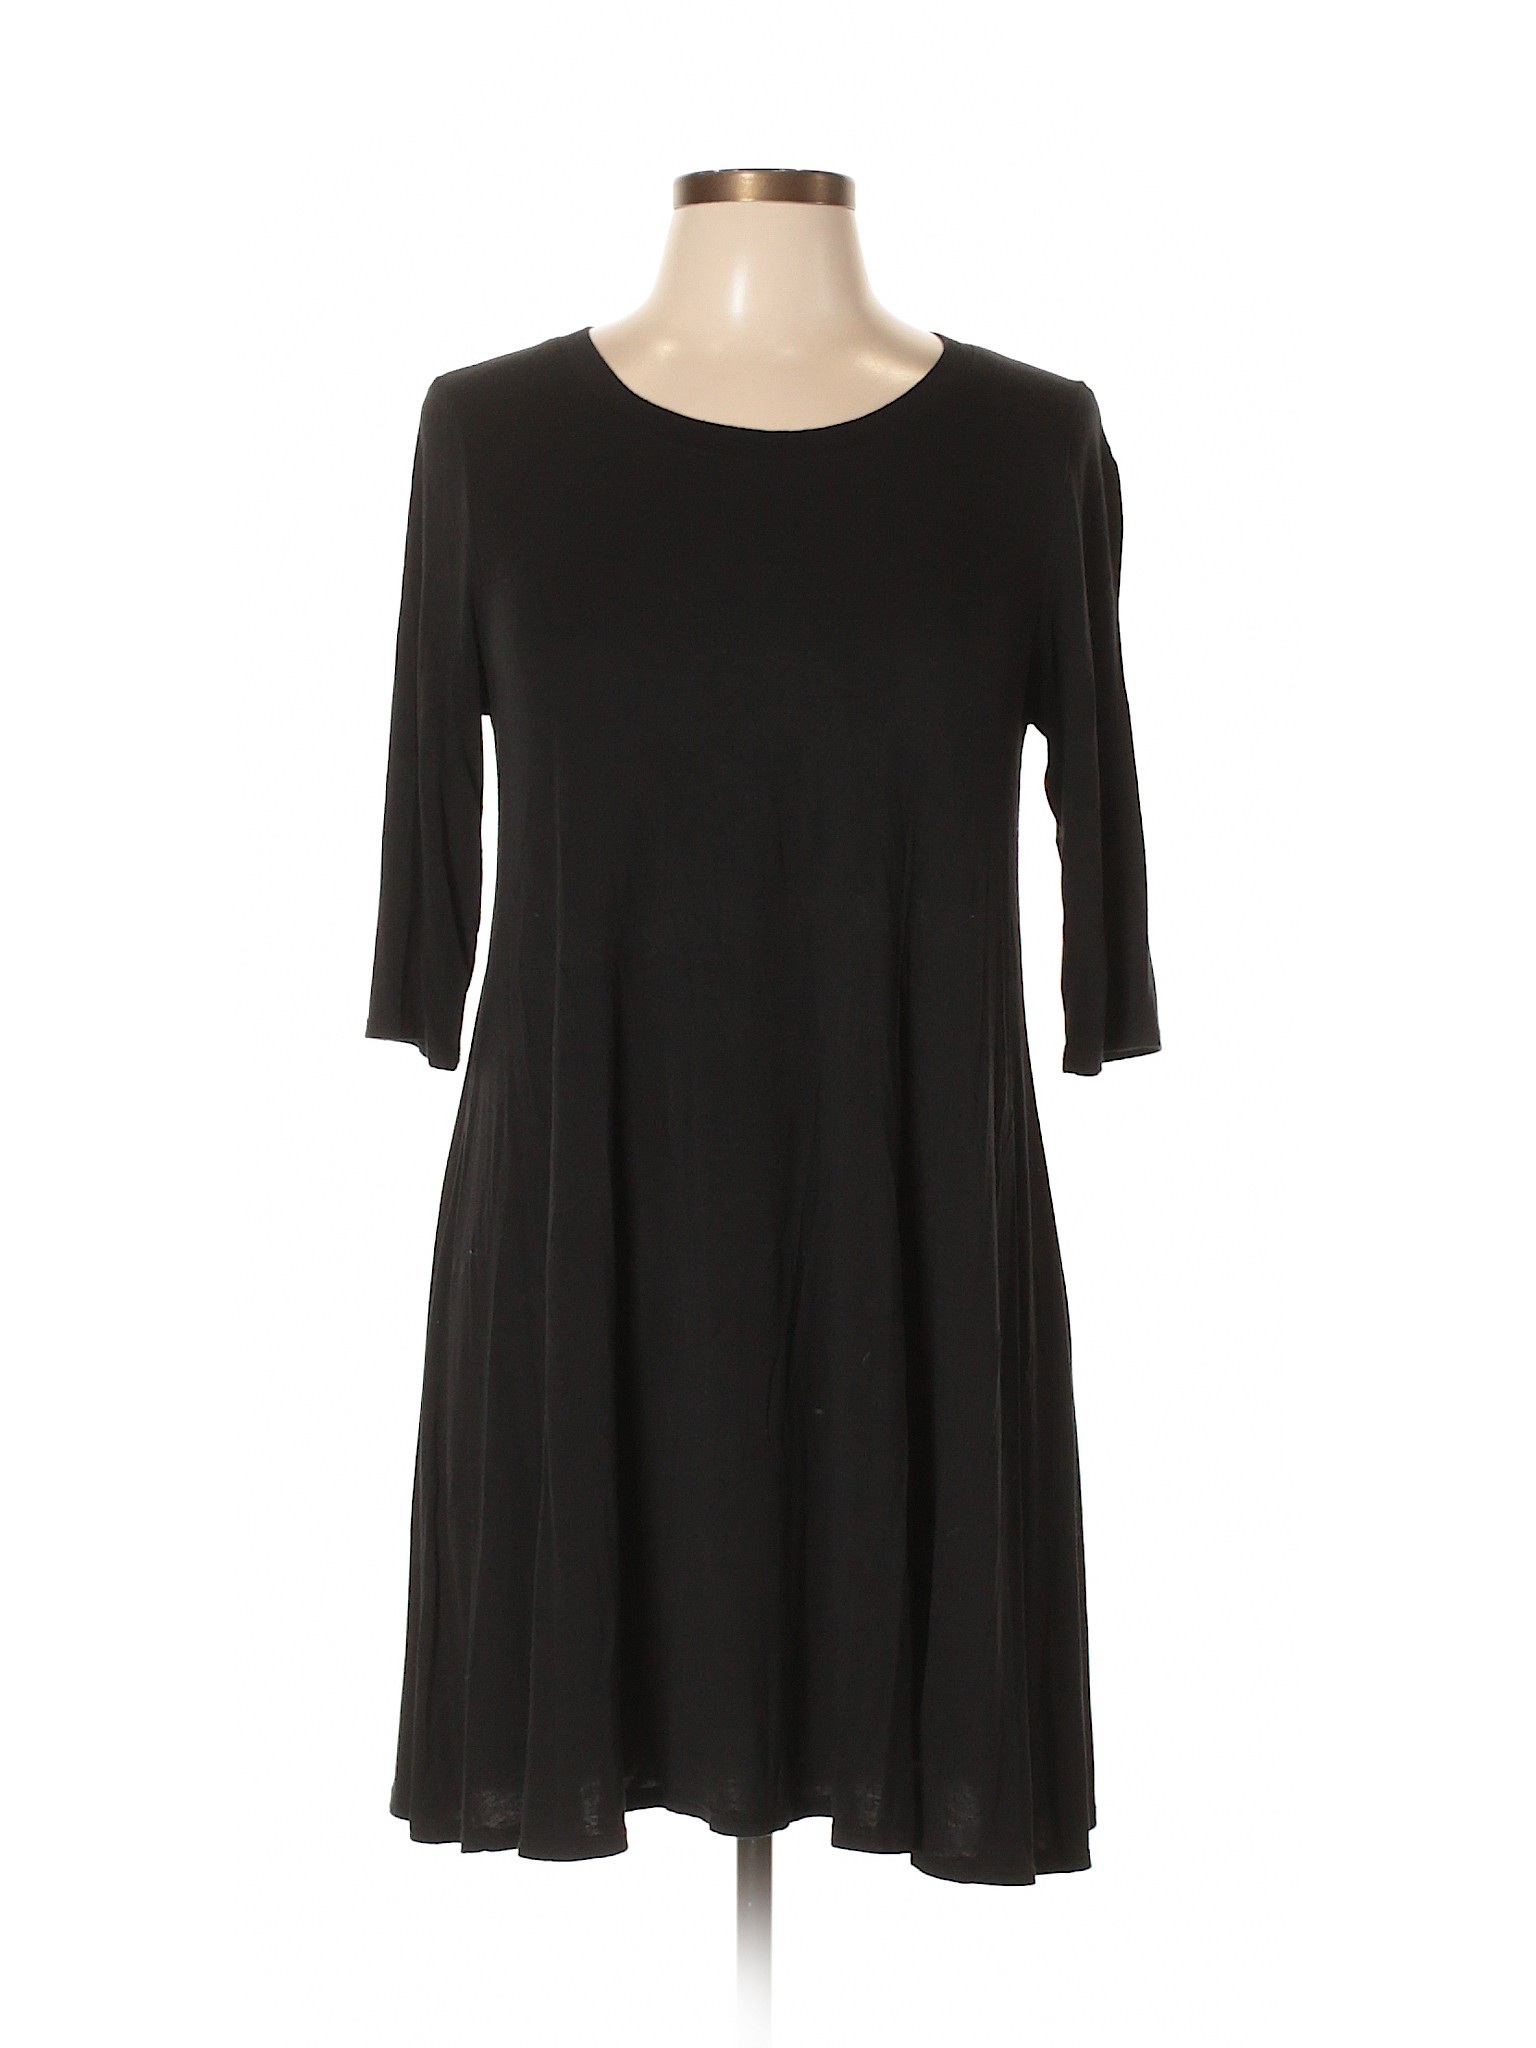 Teenplo Solid Black Casual Dress Size L - 66% off | thredUP